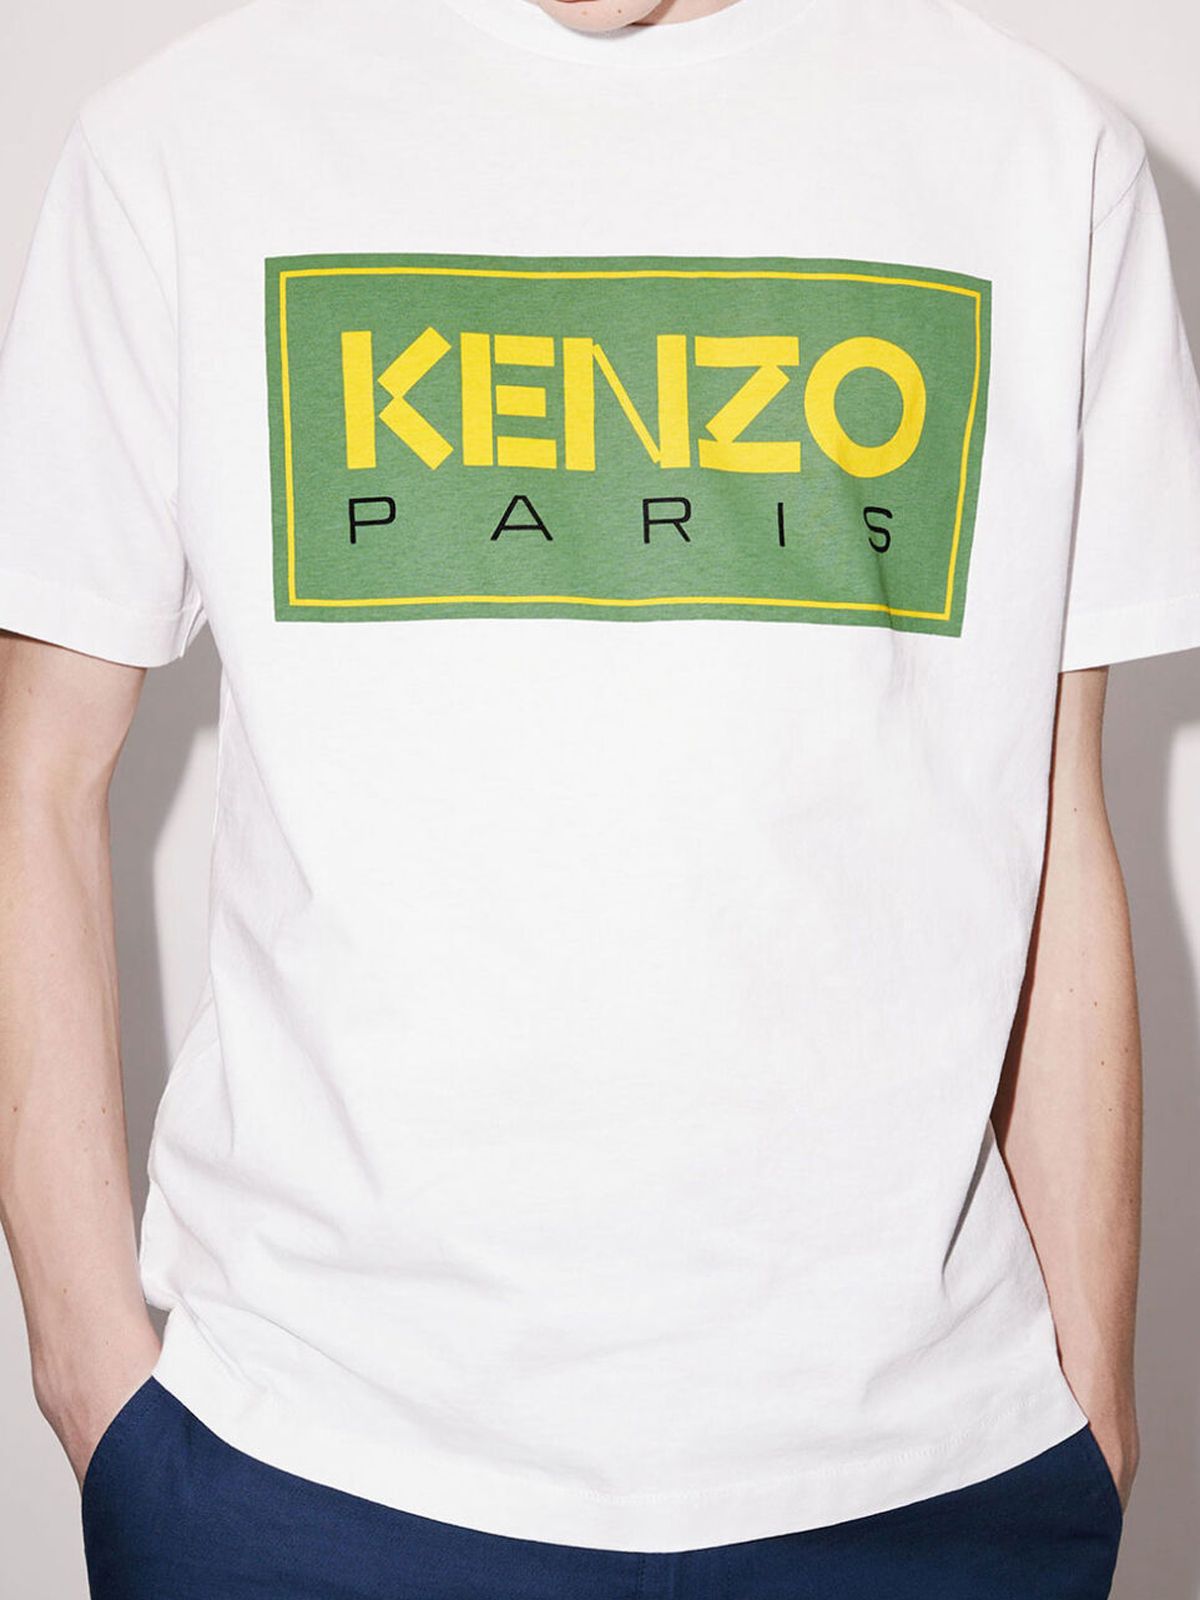 Tricolor Kenzo Paris Tee / ケンゾー パリ クラシック Tシャツ